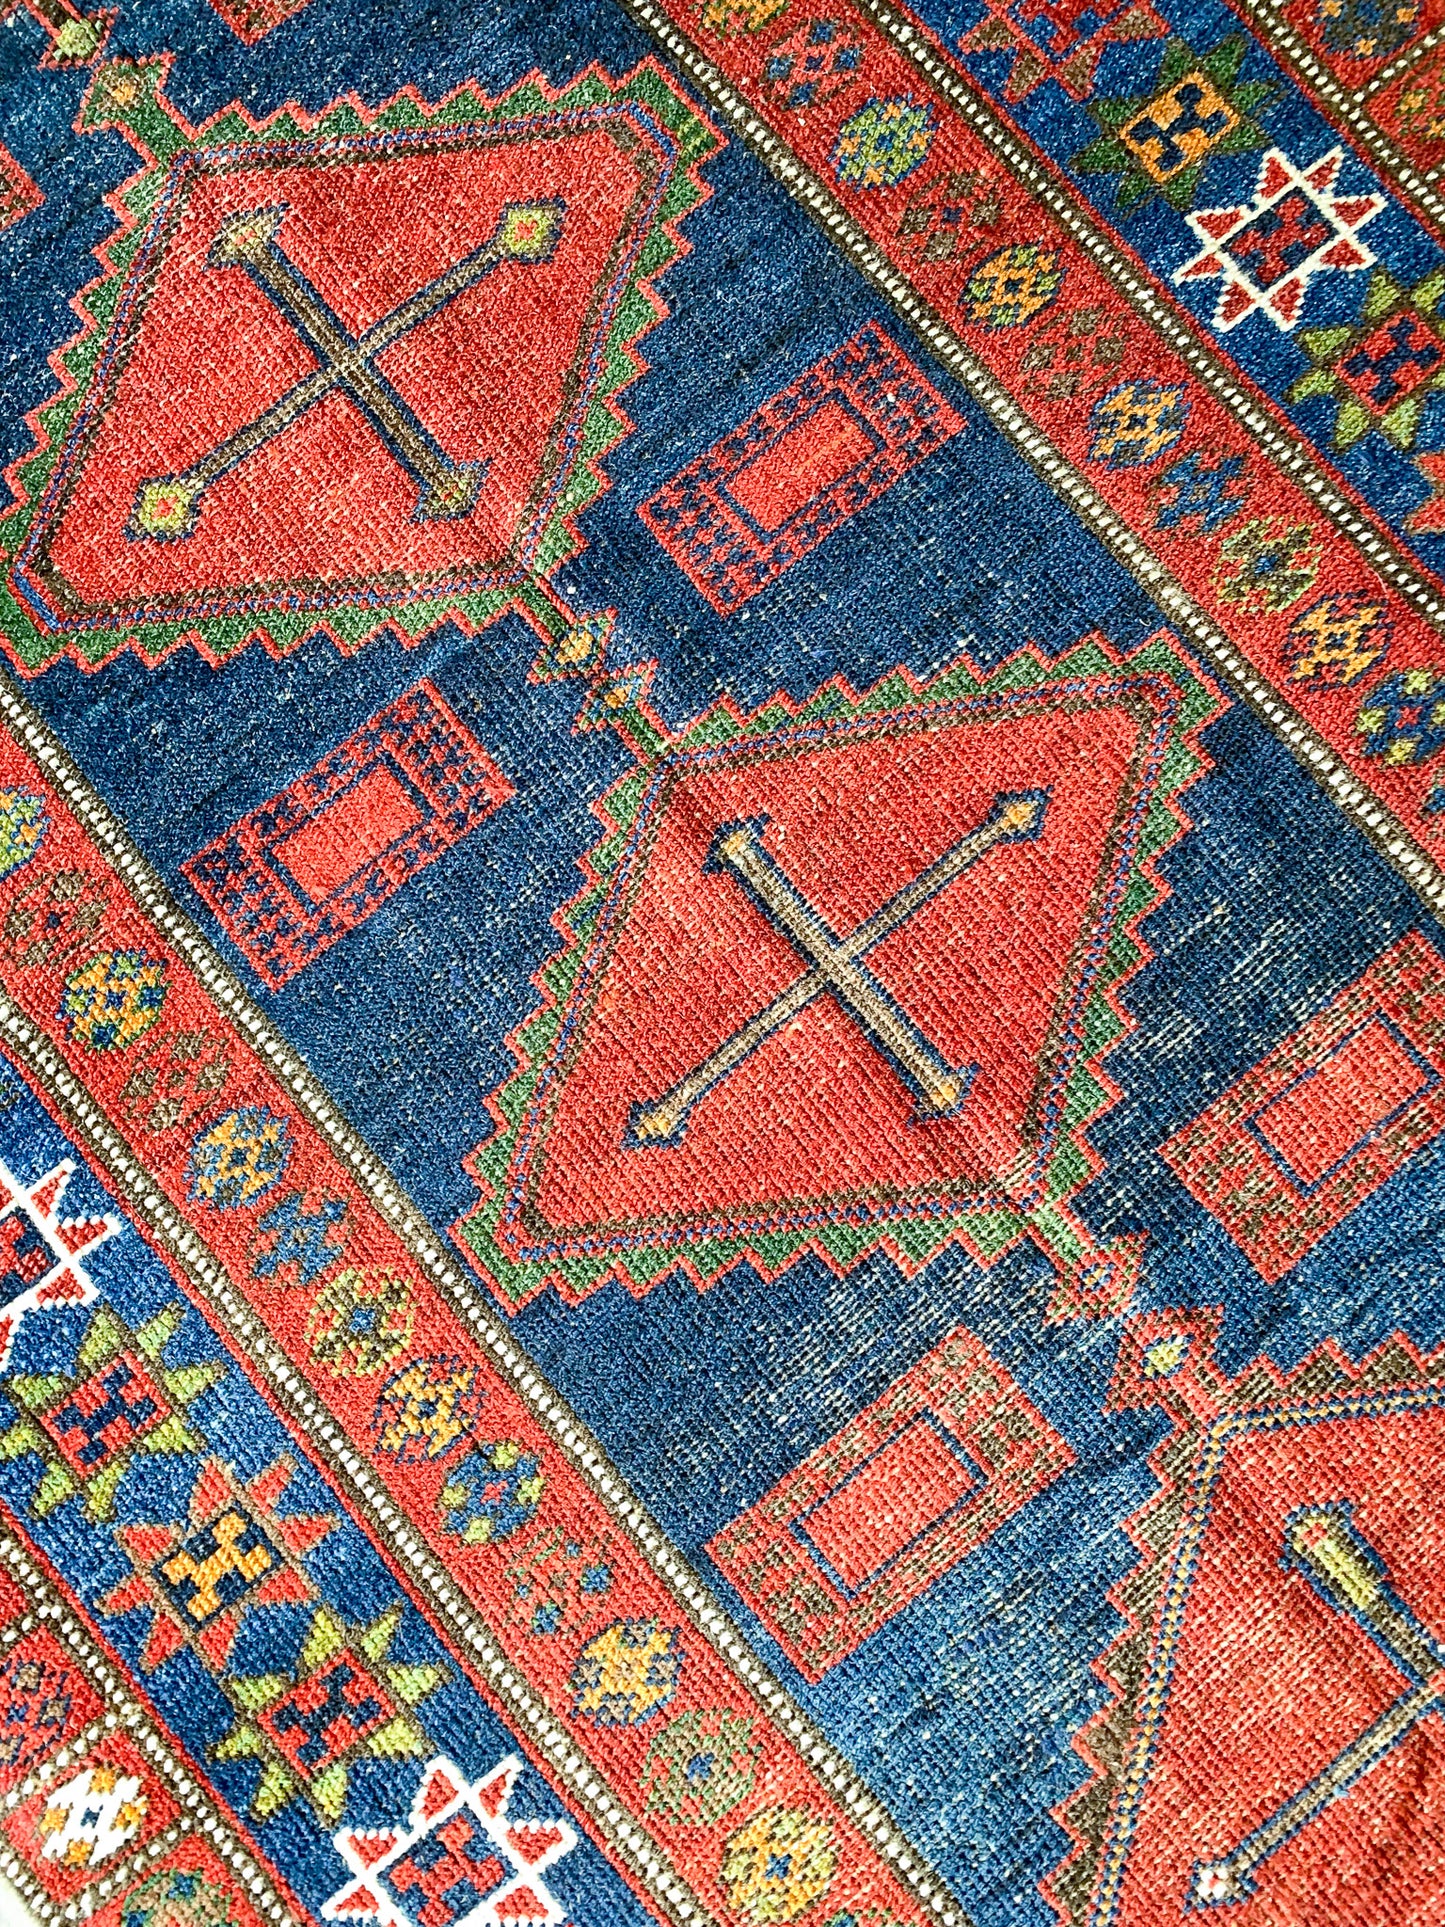 No. A1102 - 4.5' x 8.7' Antique Persian Kazak Area Rug